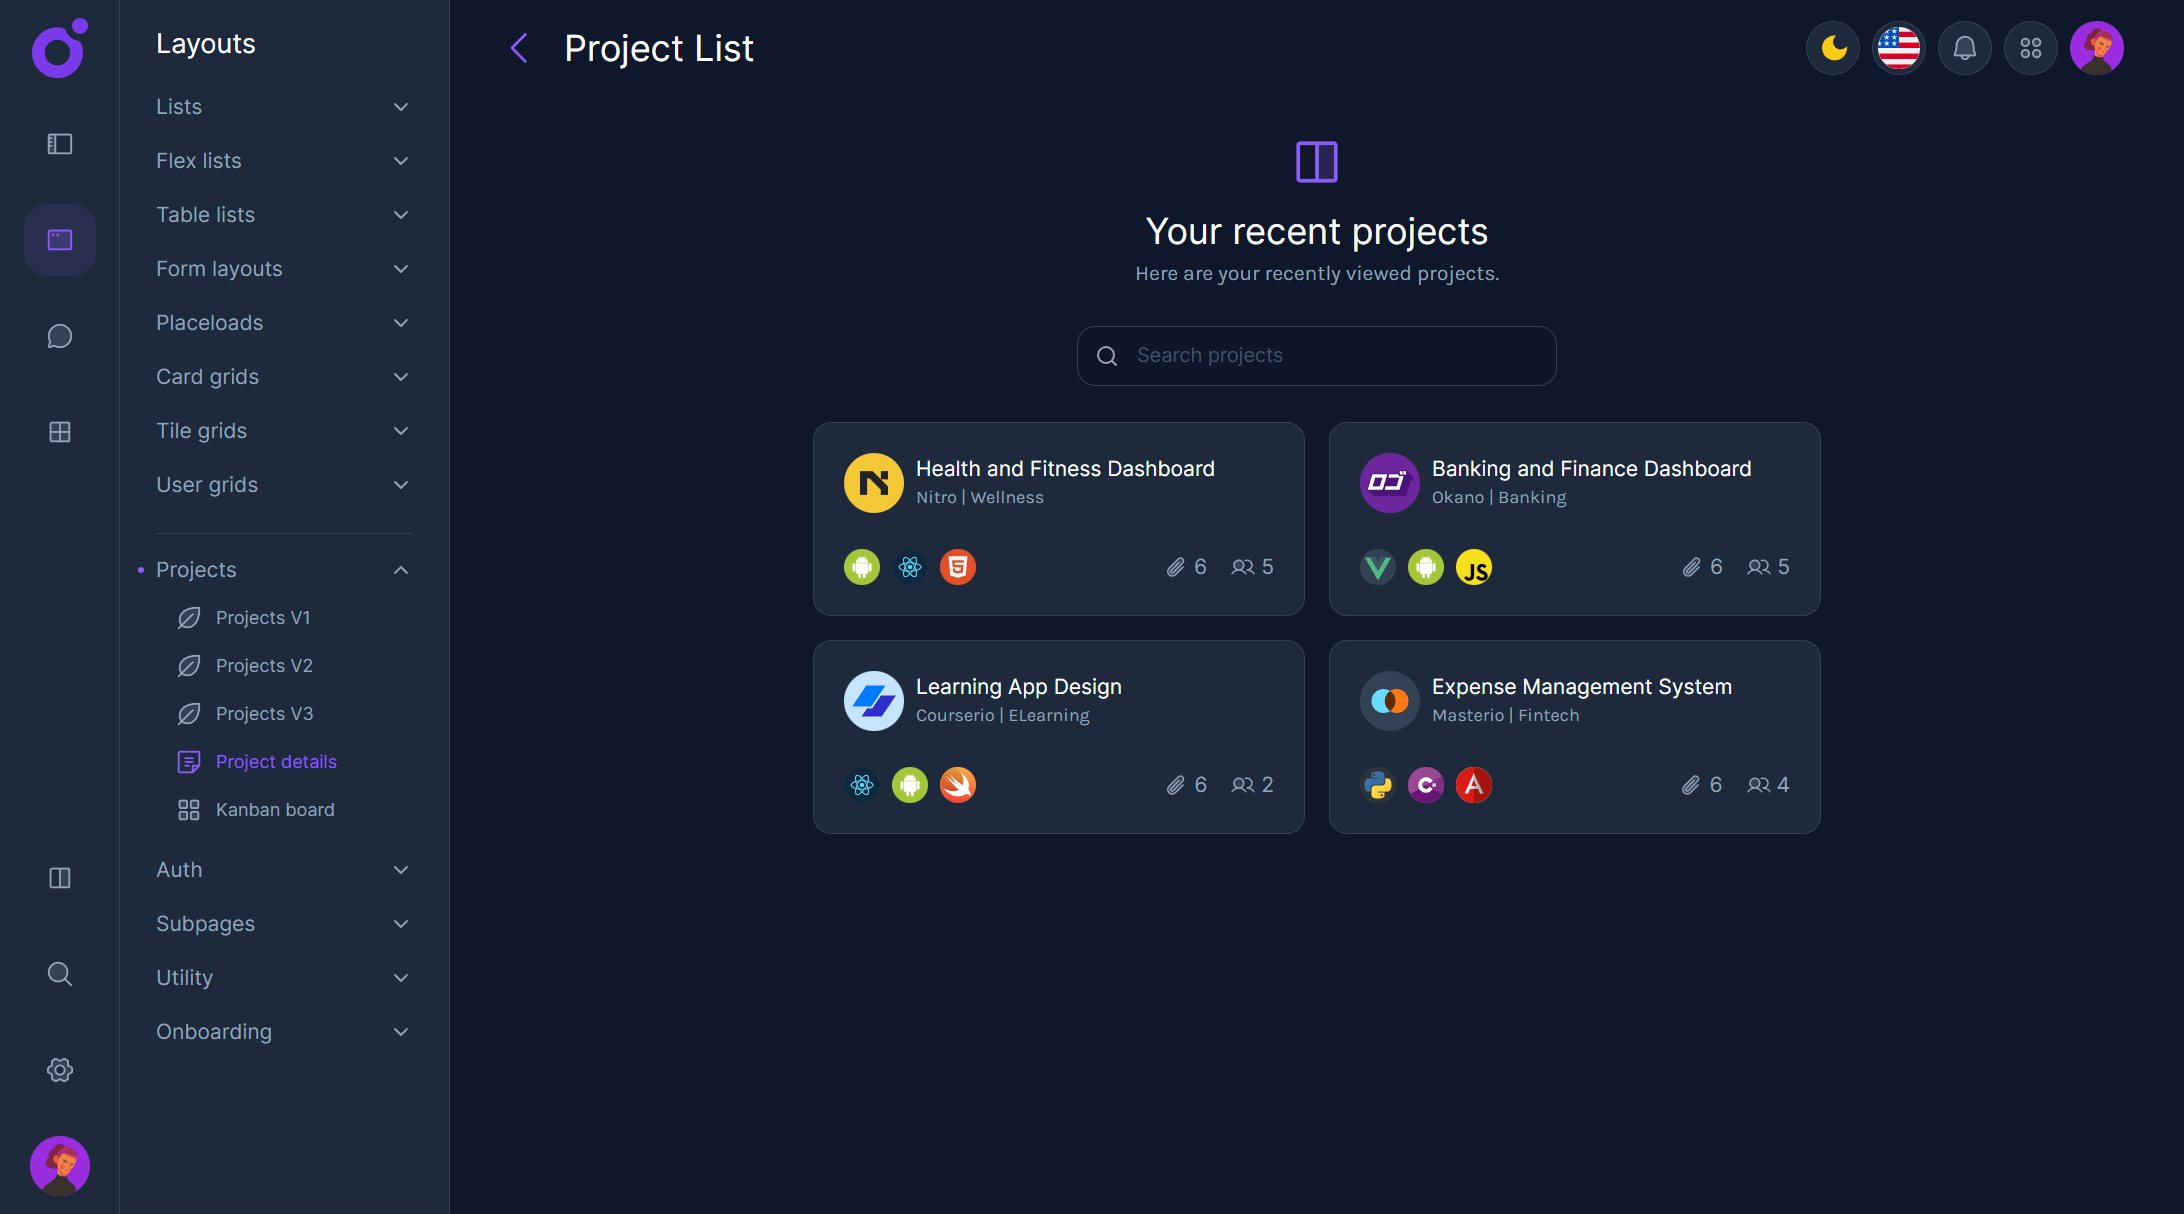 Tairo - Project details hub